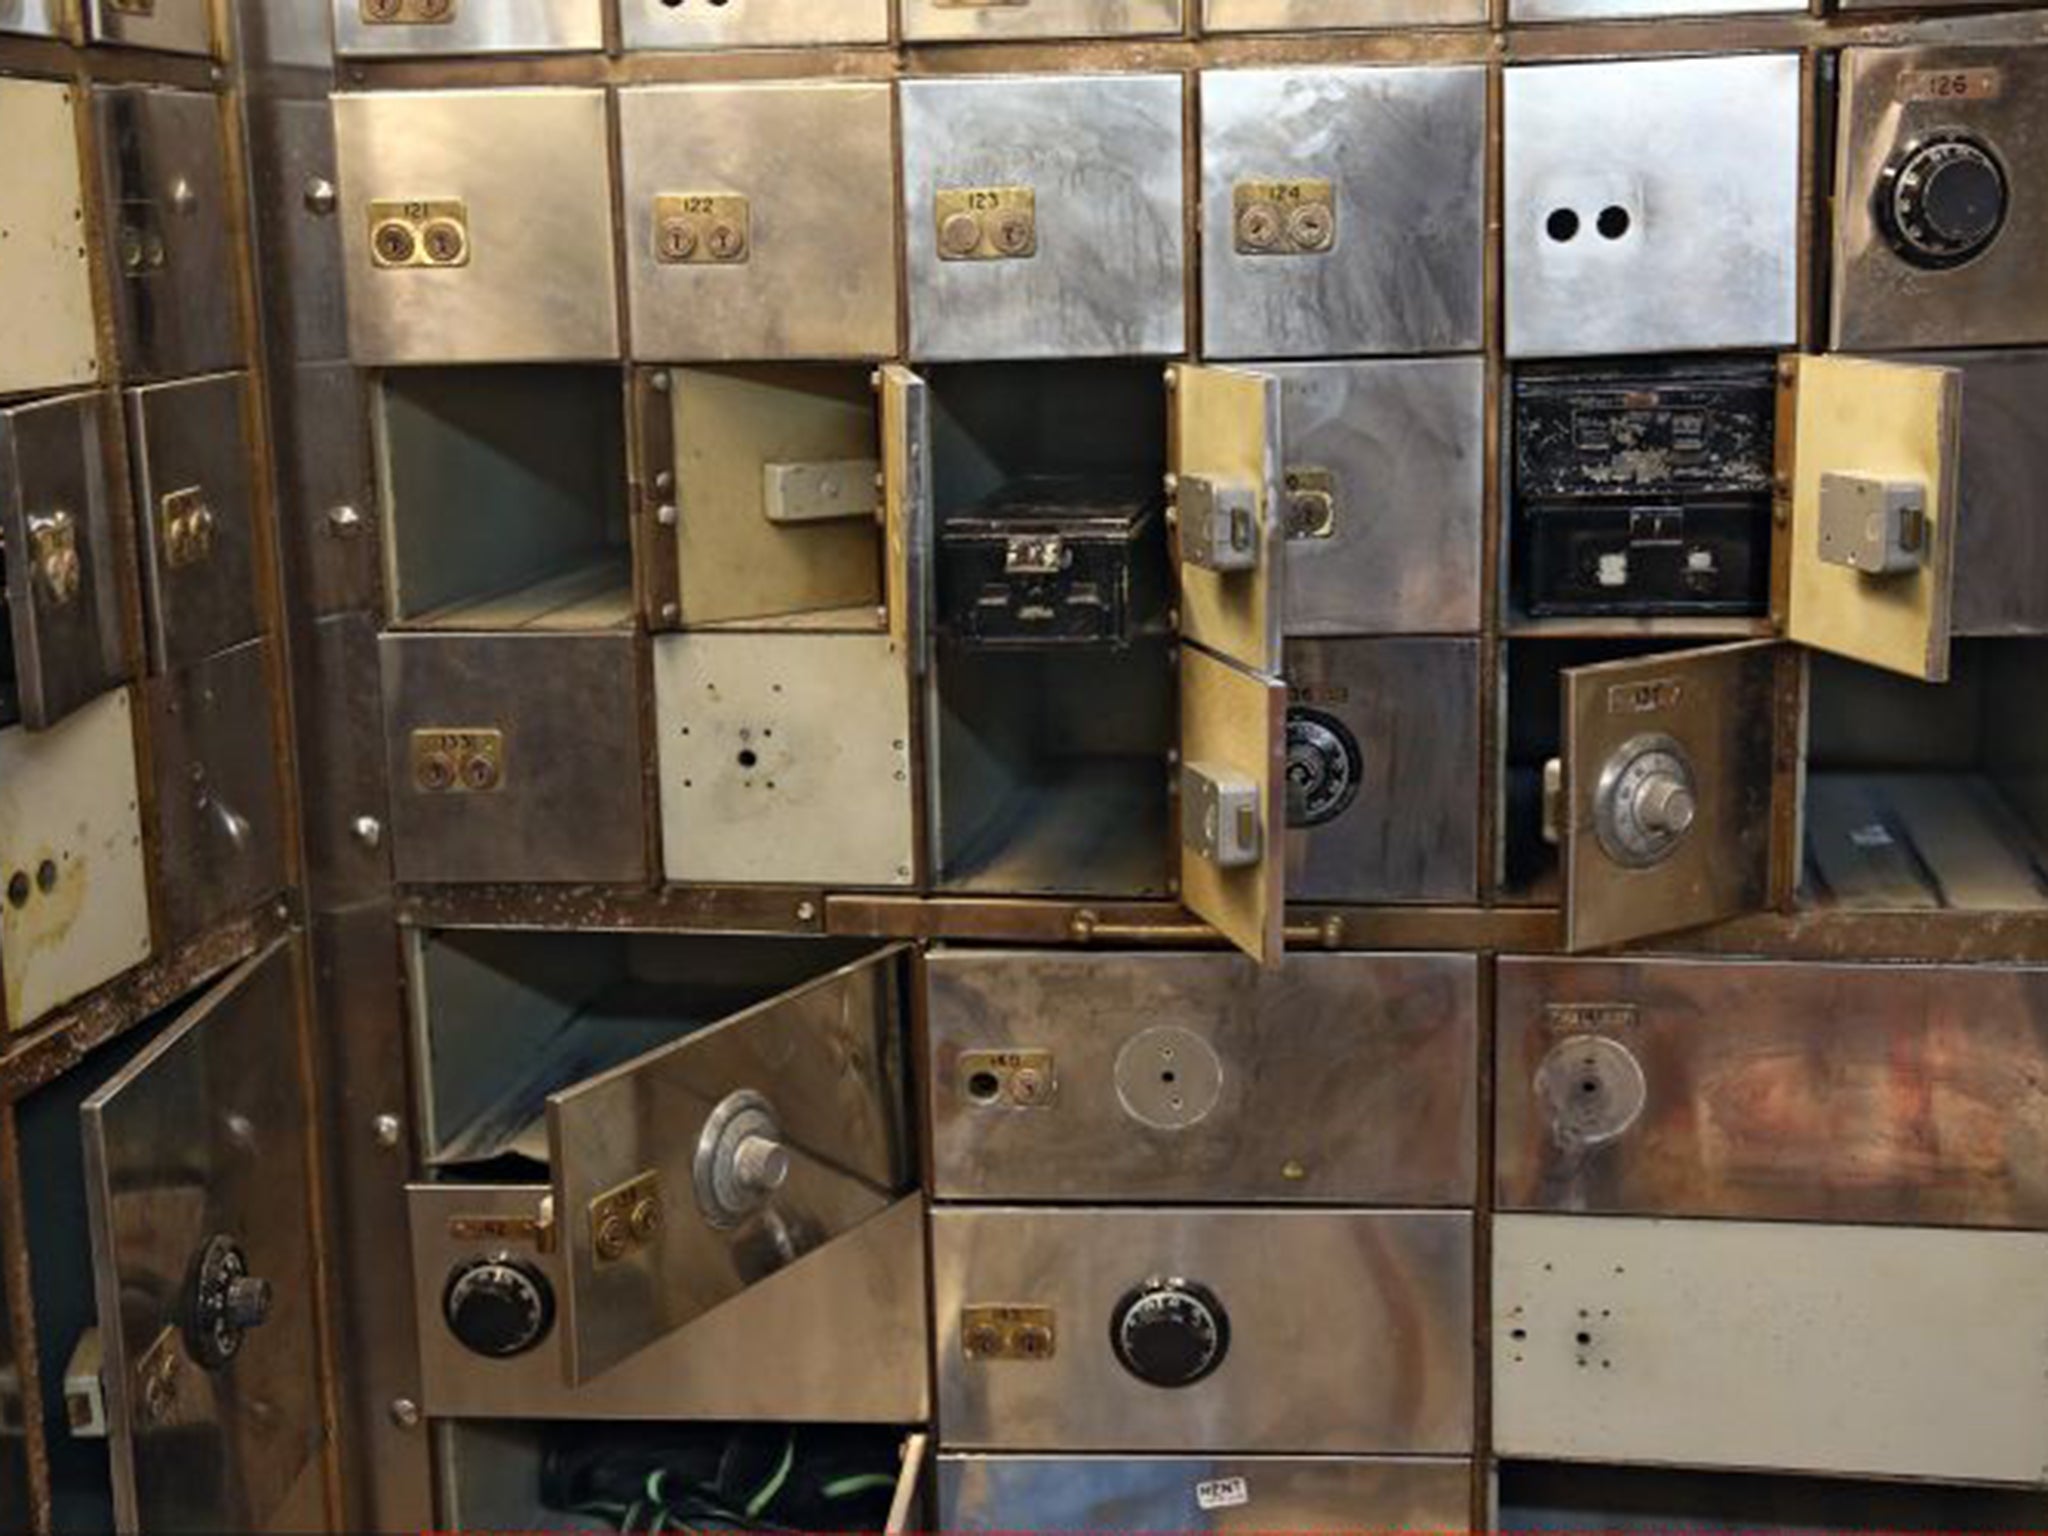 Smashed safe deposit boxes in the underground vault of the Hatton Garden Safe Deposit Company. Around £200 million was stolen during the burglary